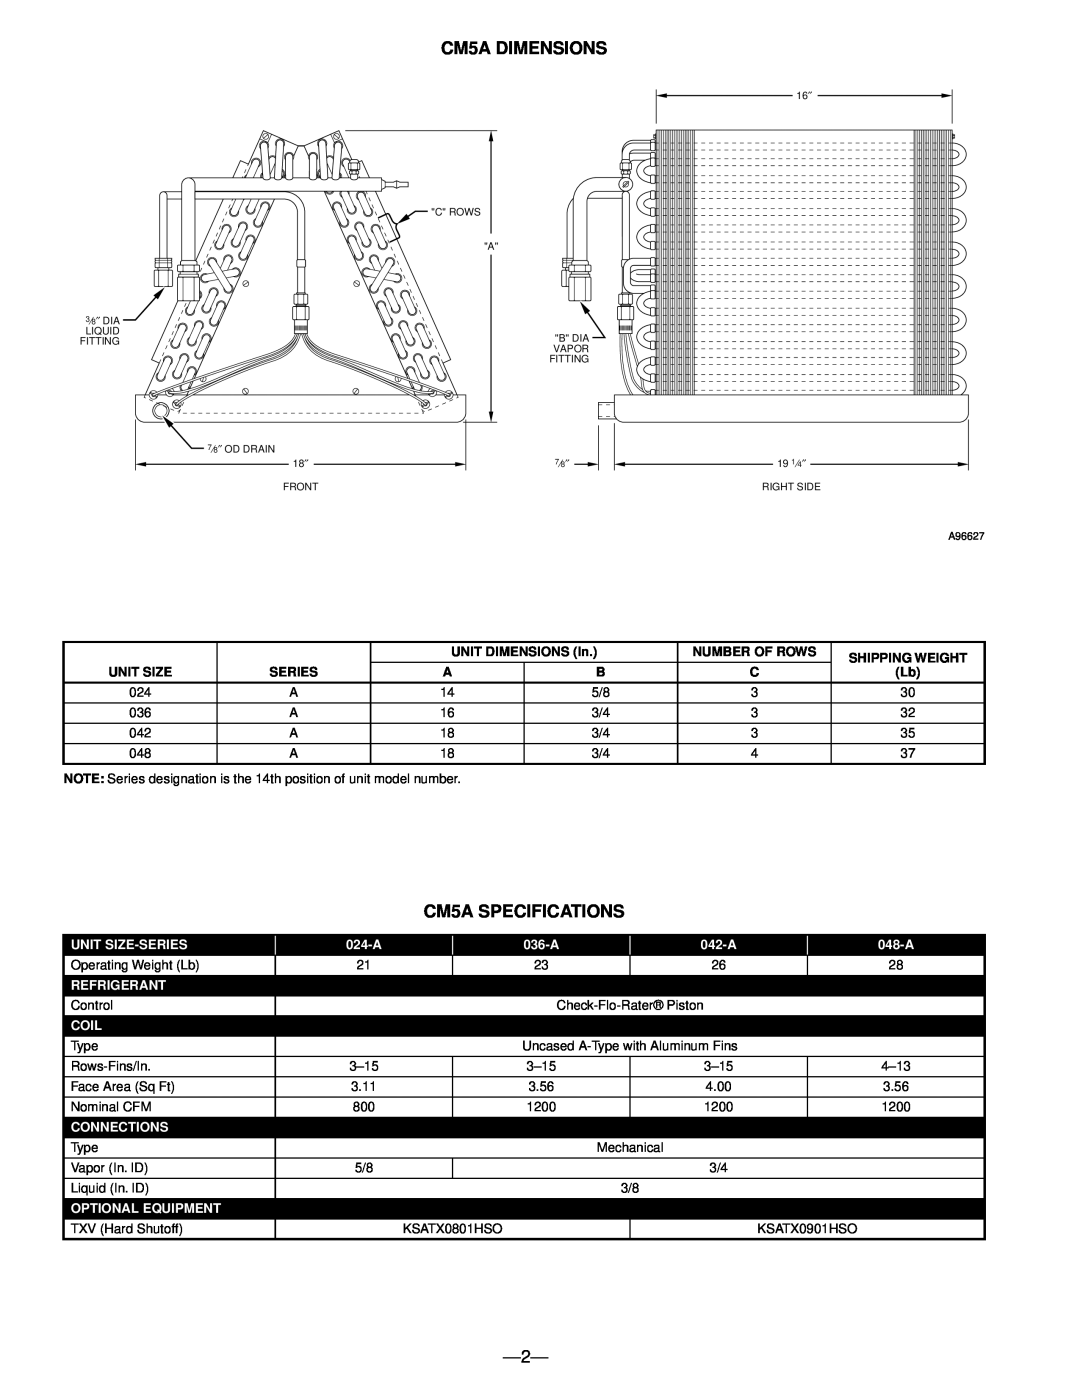 Bryant CM5B manual CM5A DIMENSIONS, CM5A SPECIFICATIONS, Unit Size-Series, 024-A, 036-A, 042-A, 048-A, Refrigerant, Coil 